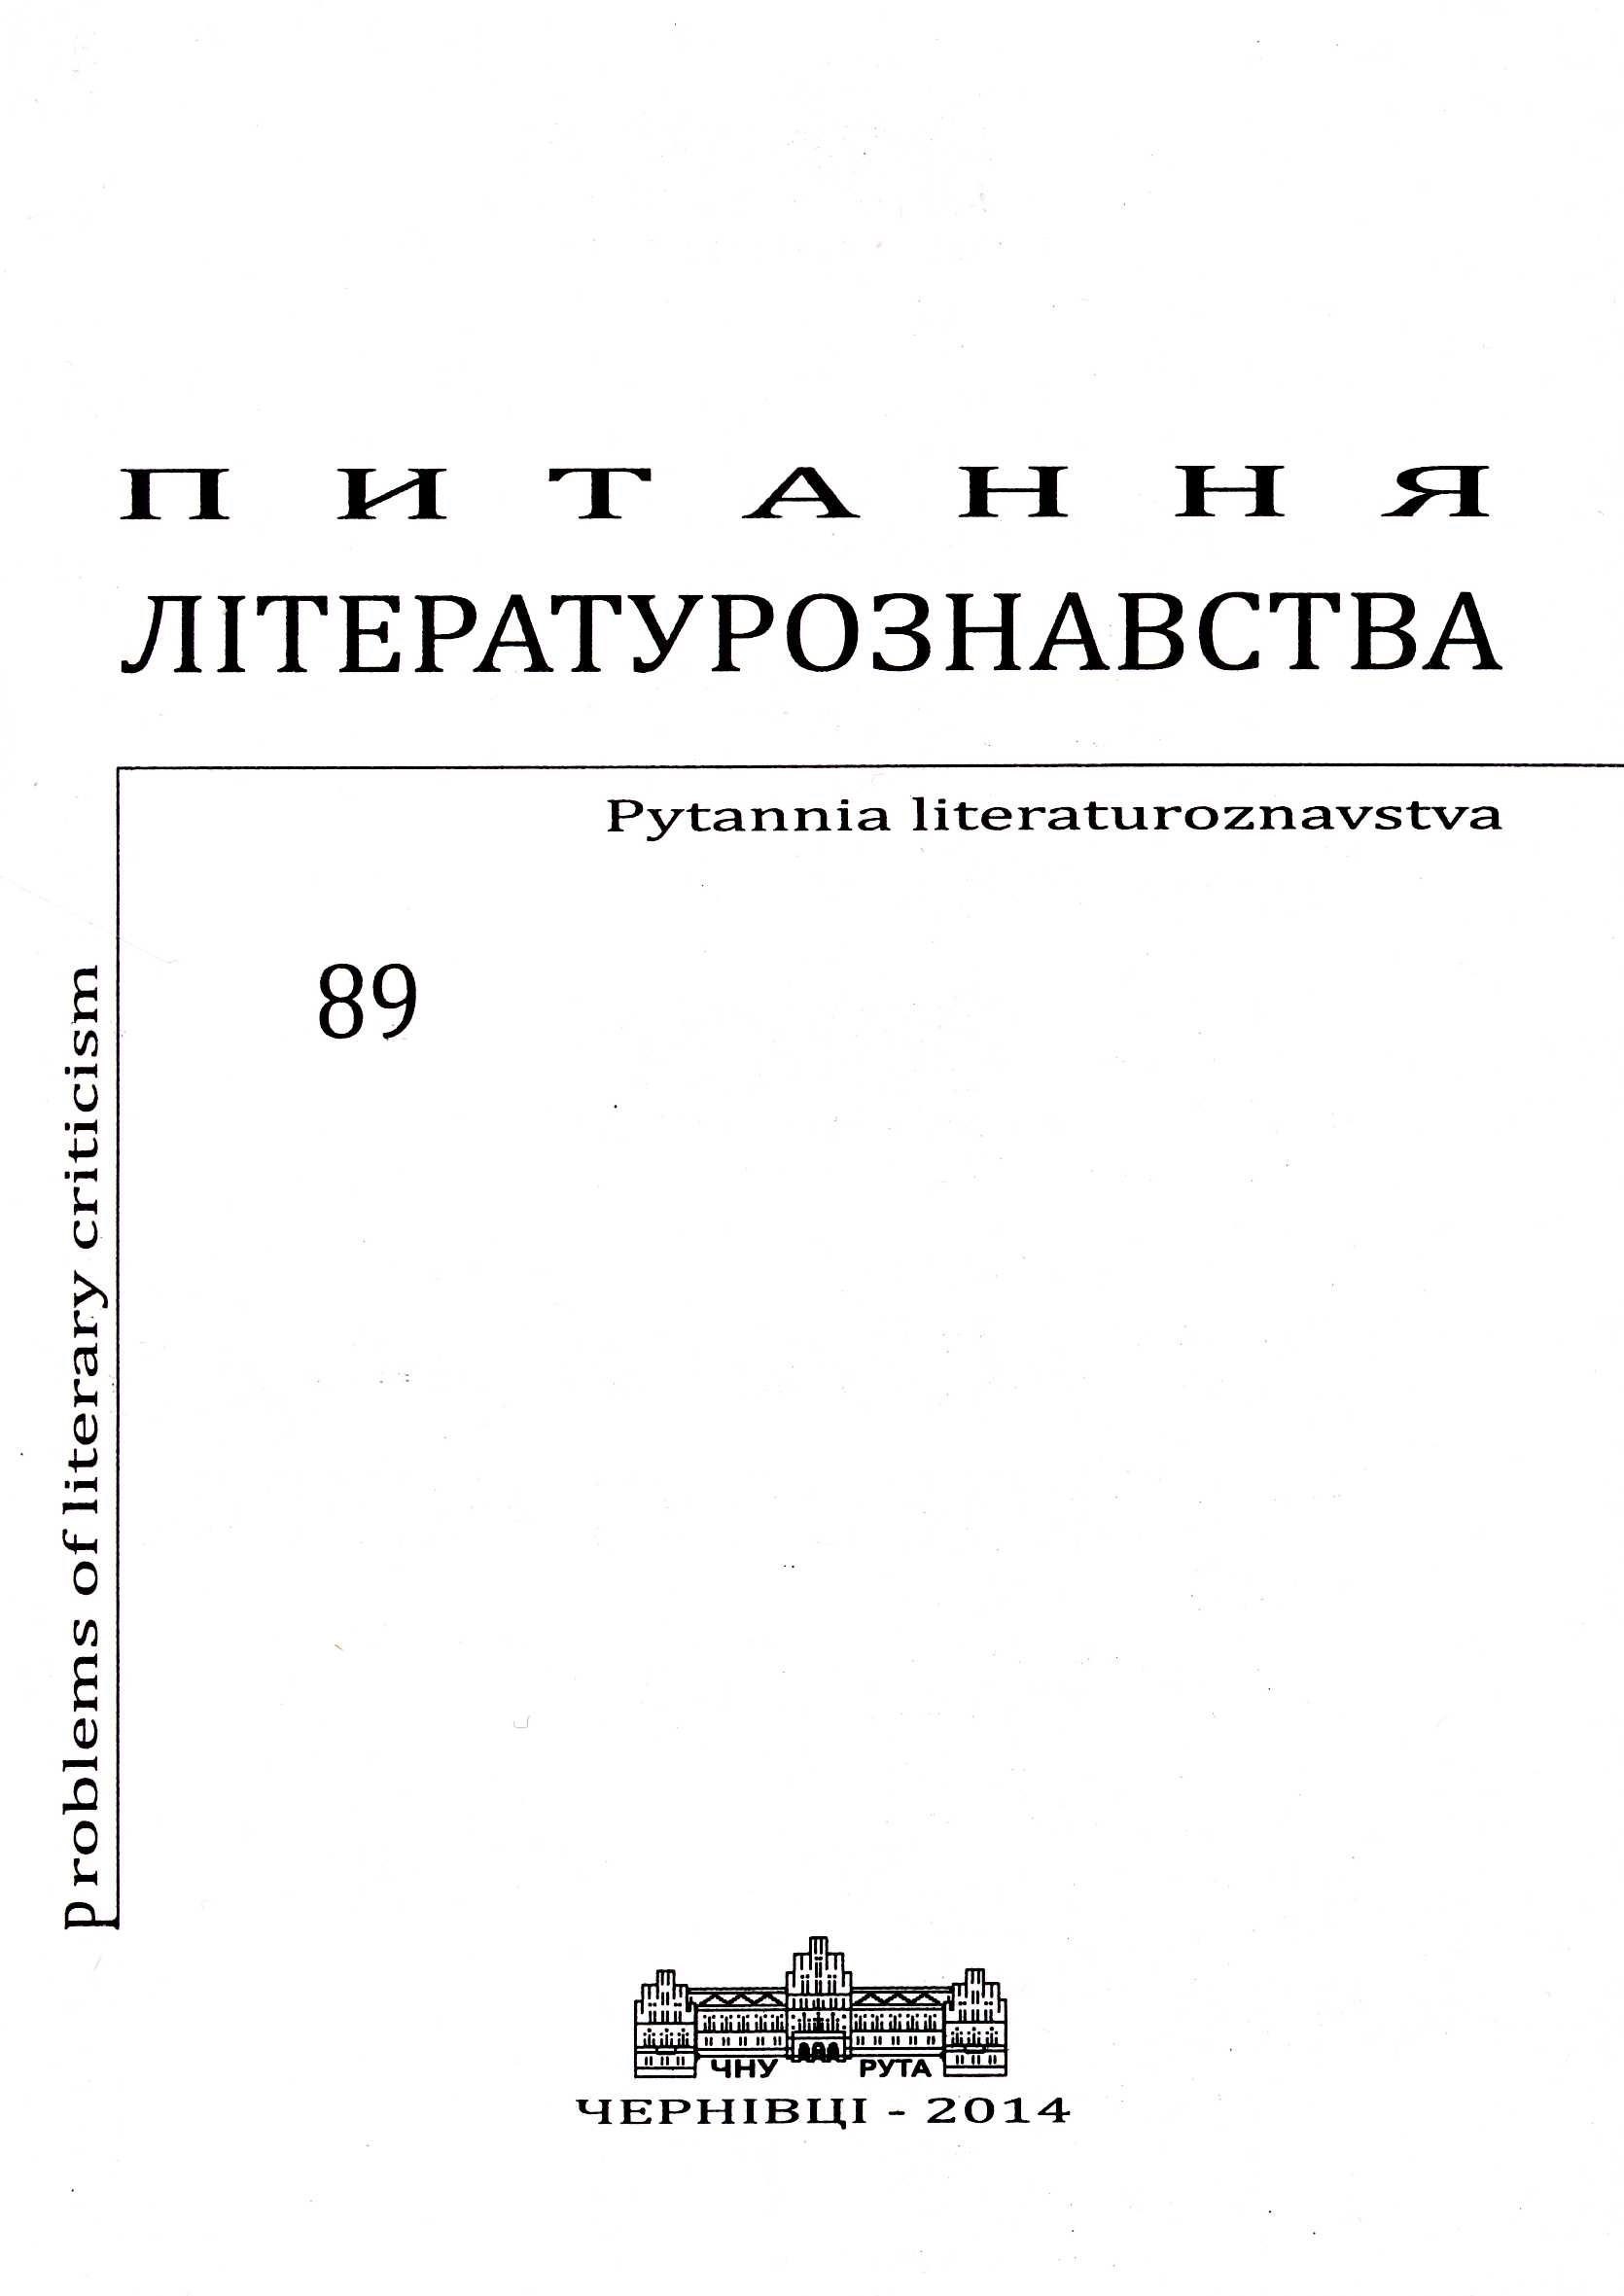 І. Kotlyarevsky’s Biography in B. Levin’s Novel “Funny Sage” Cover Image